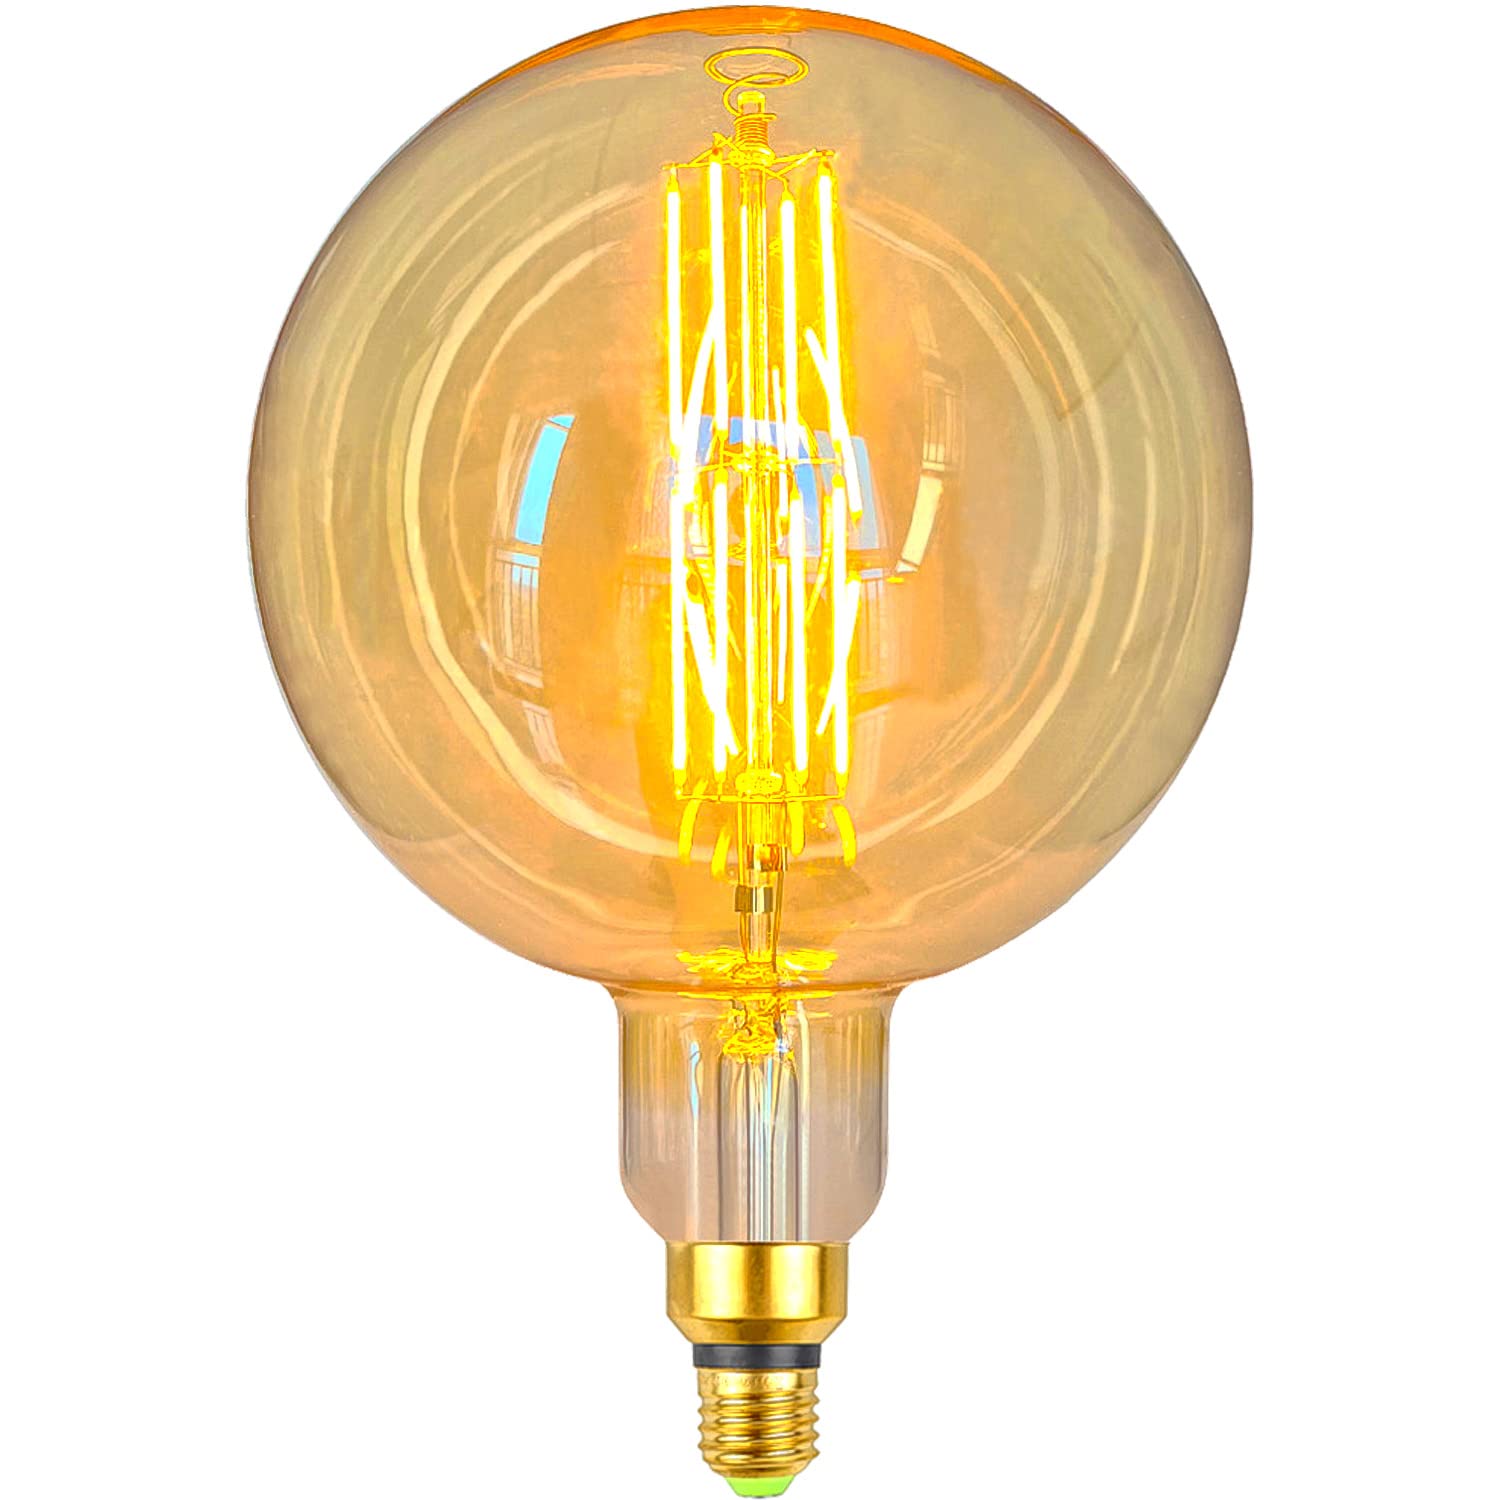 TIANFAN Antike LED-Lampen Riesige dekorative Glühbirne 8W Dimmbare E27-Basis 220 / 240V 600Lumen Supergelb Warm